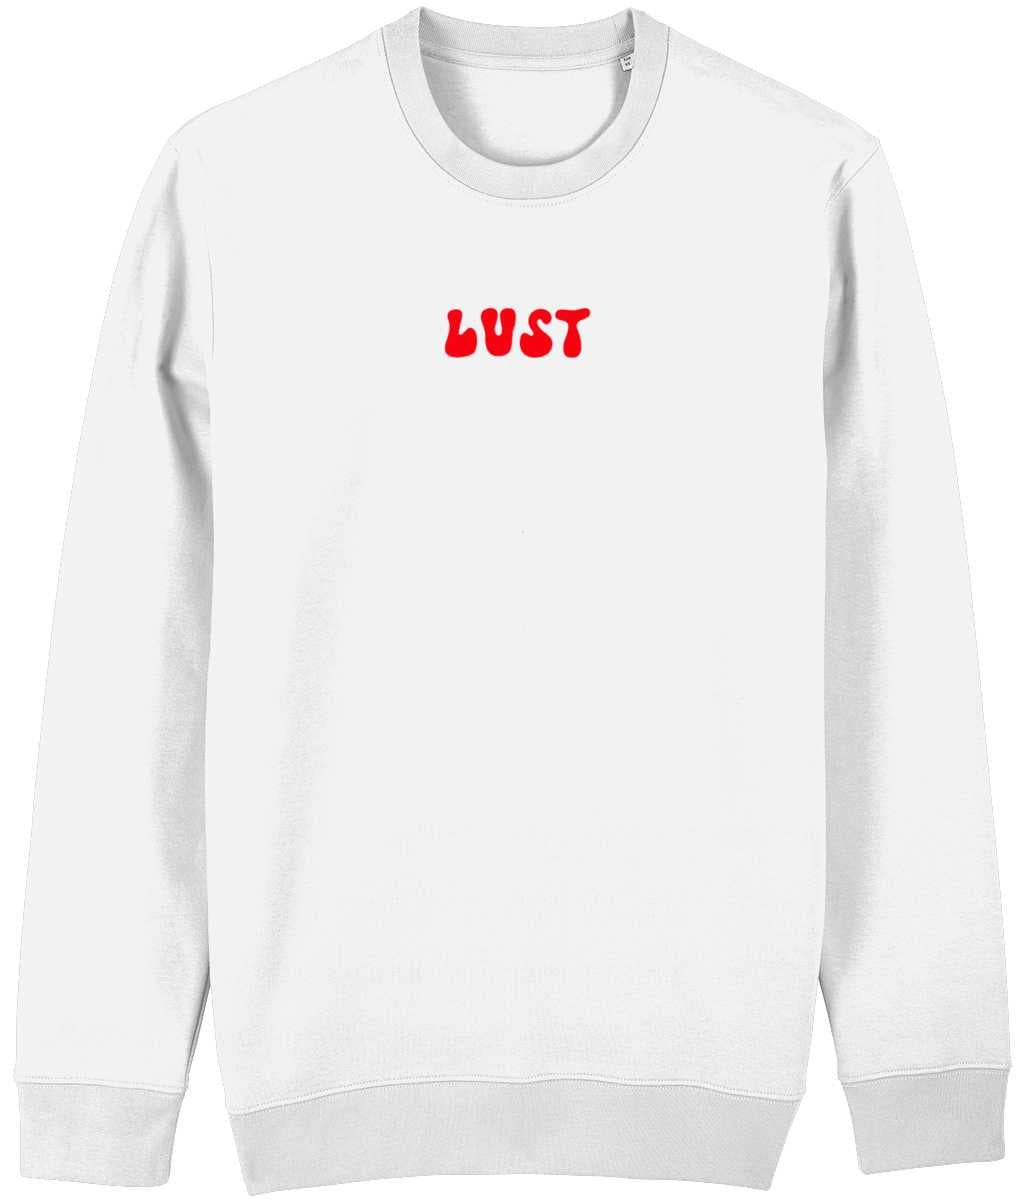 Lust non gender sweatshirt Cherchez La Femme brand